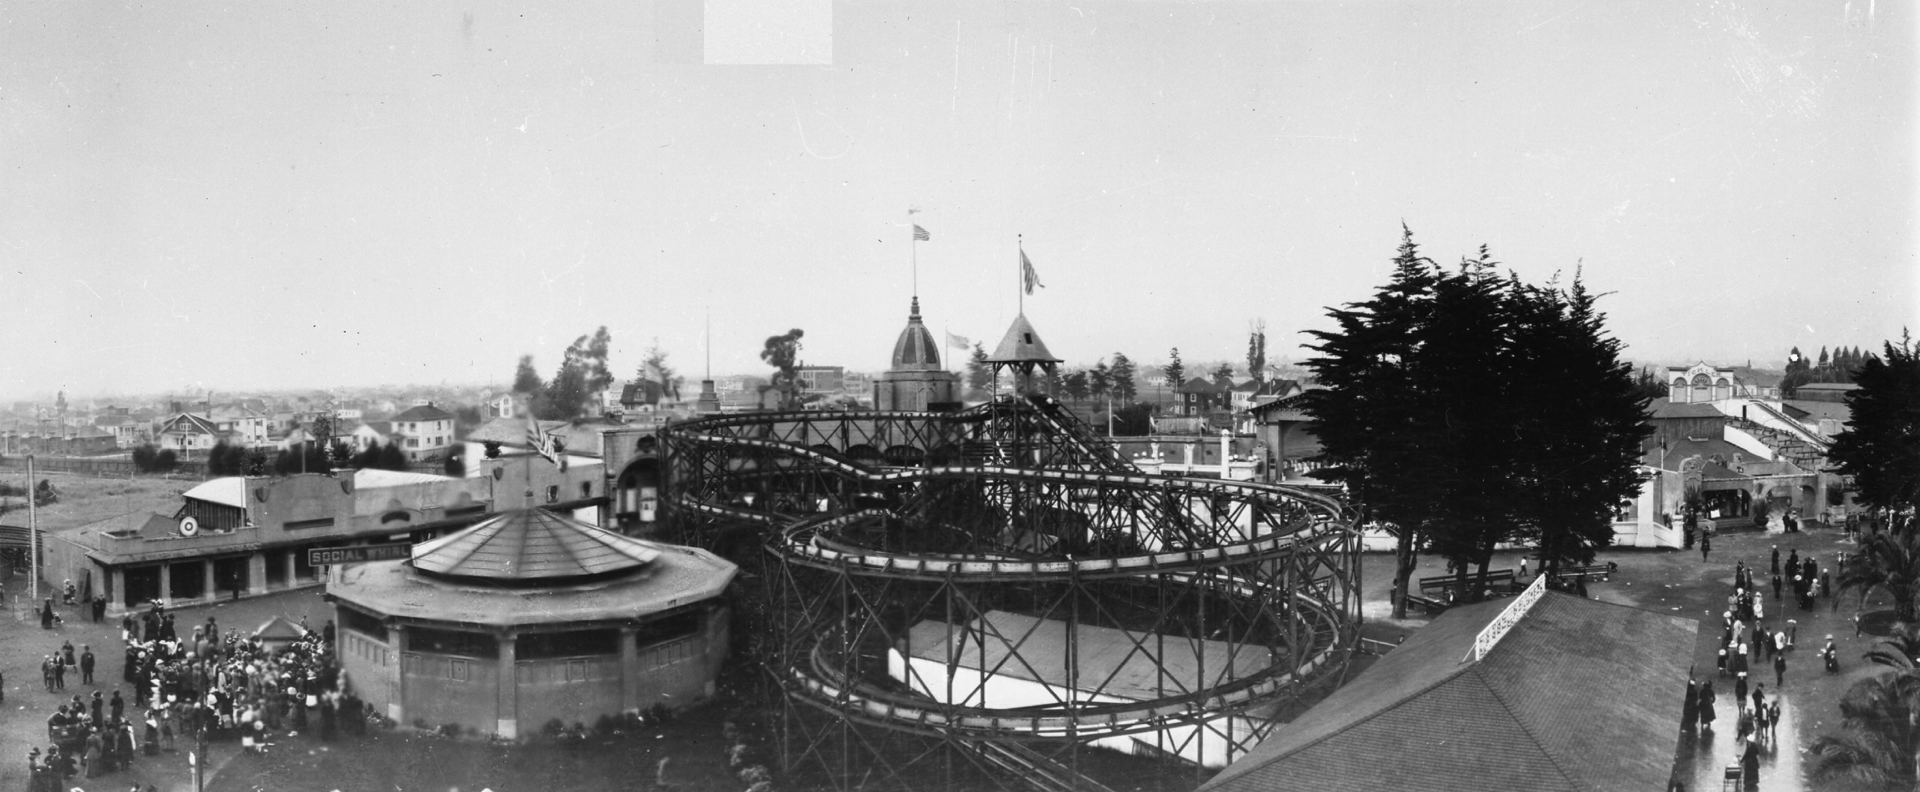 Old photo of an amusement park